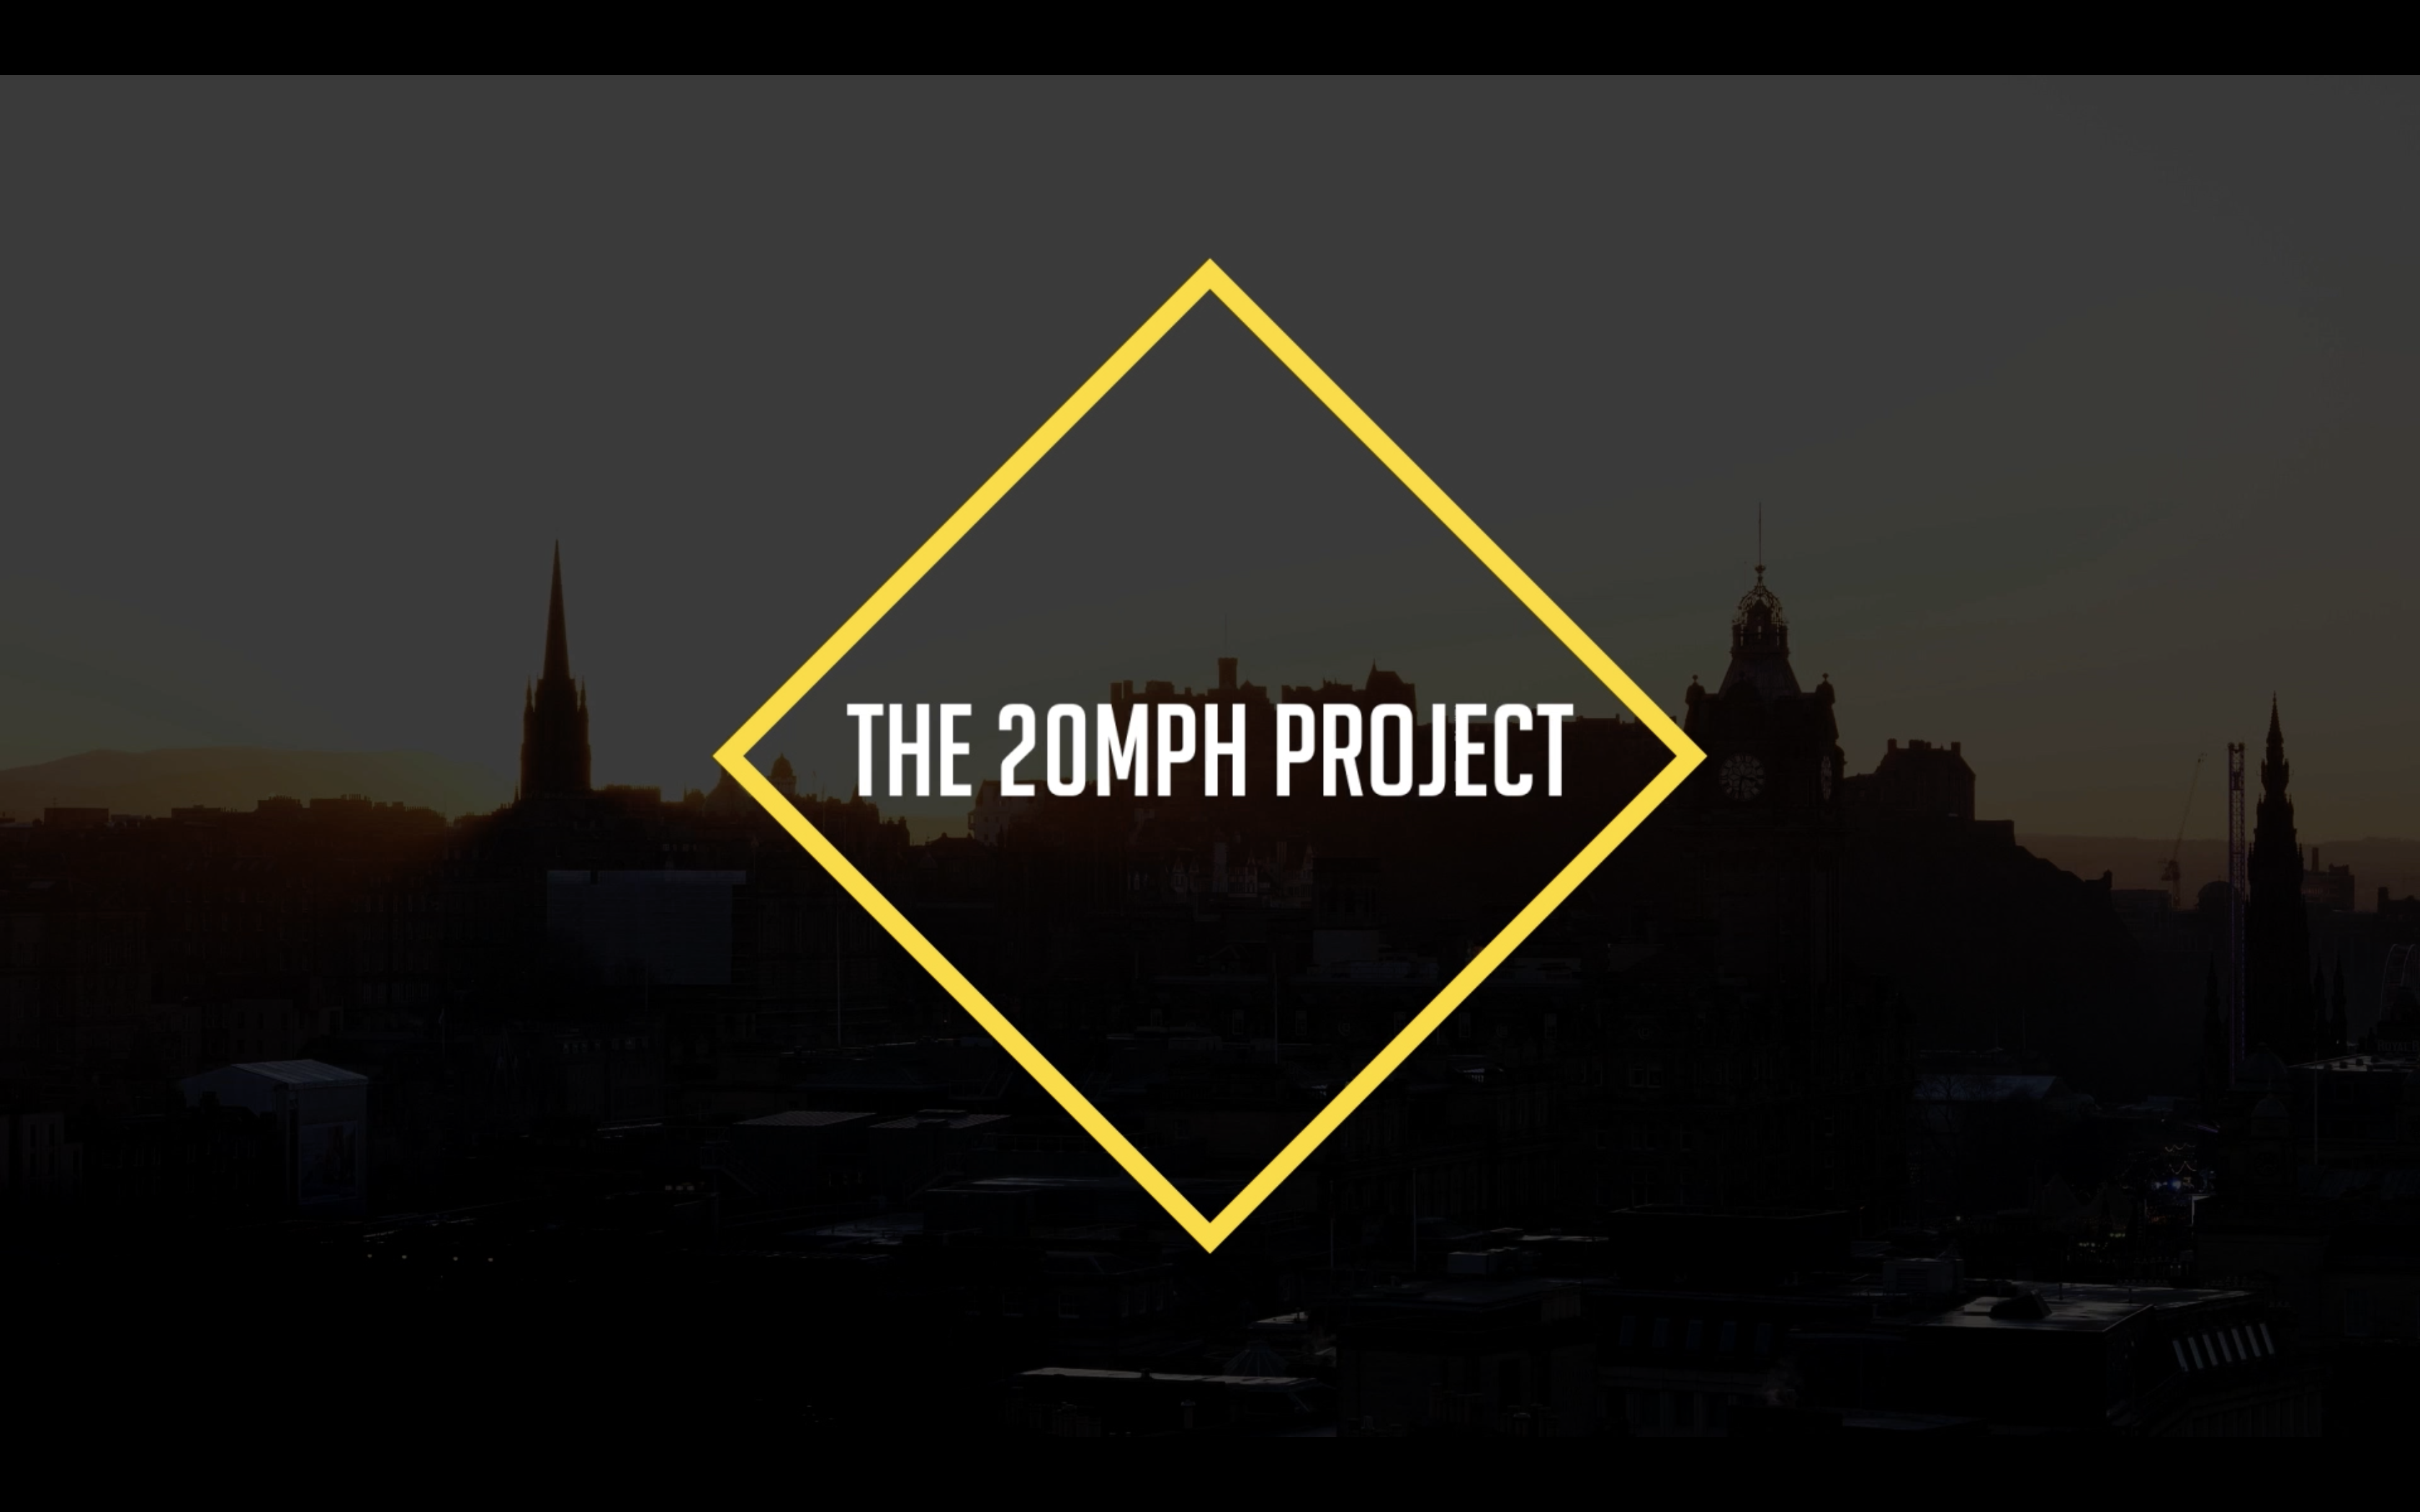 Featured image of 20mph logo and Edinburgh City skyline backdrop